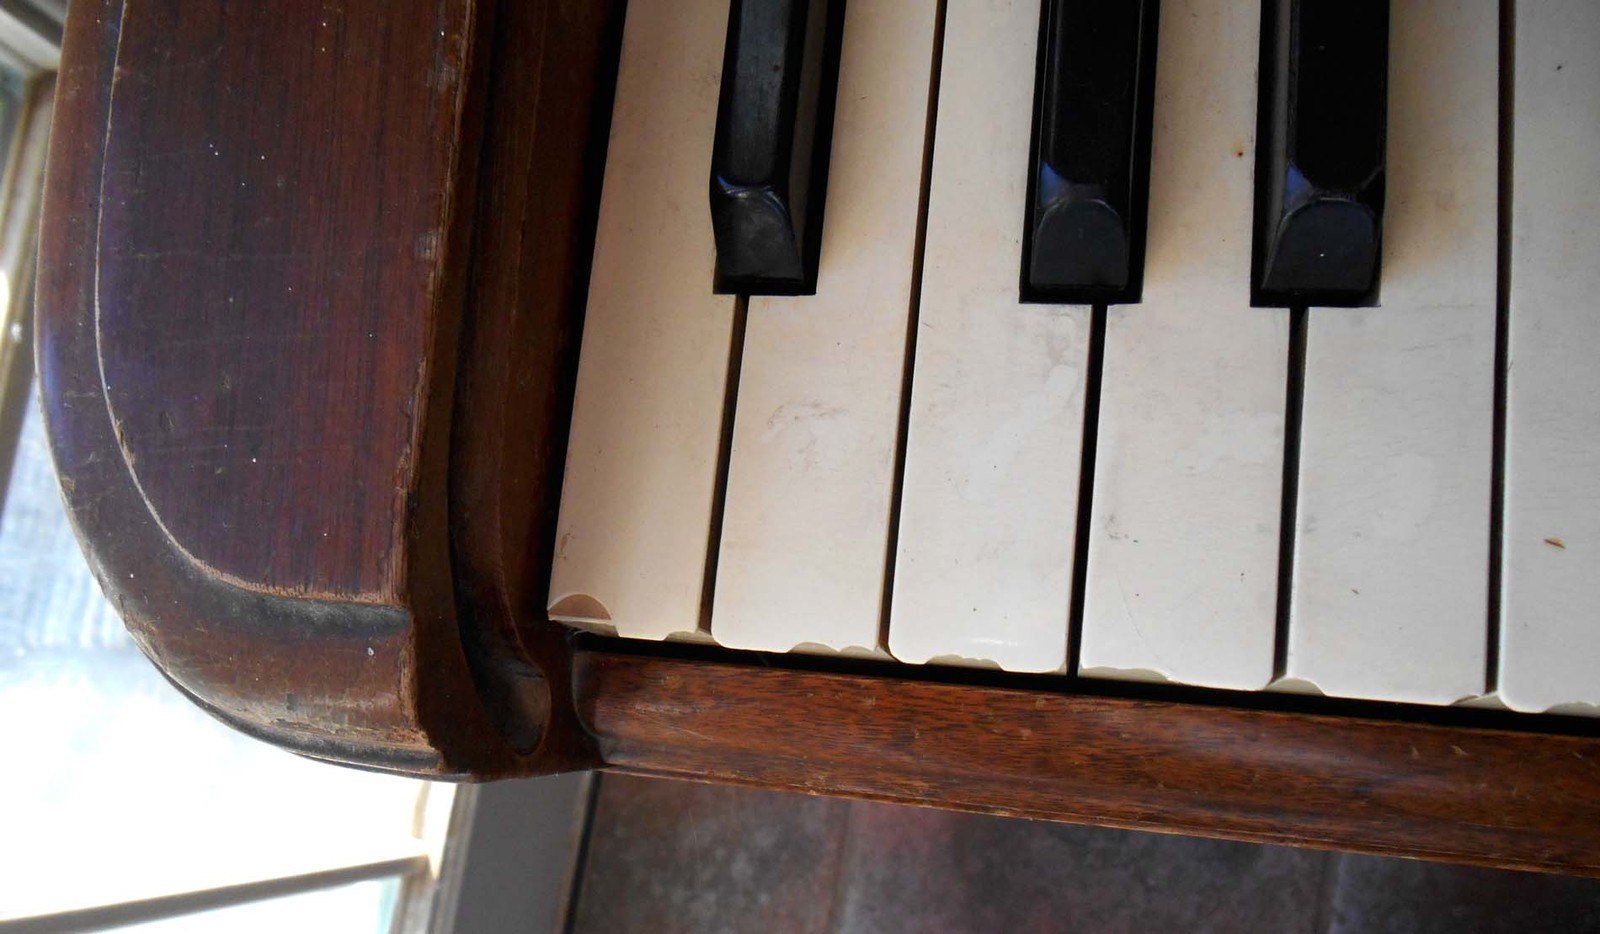 old wurlitzer spinet piano